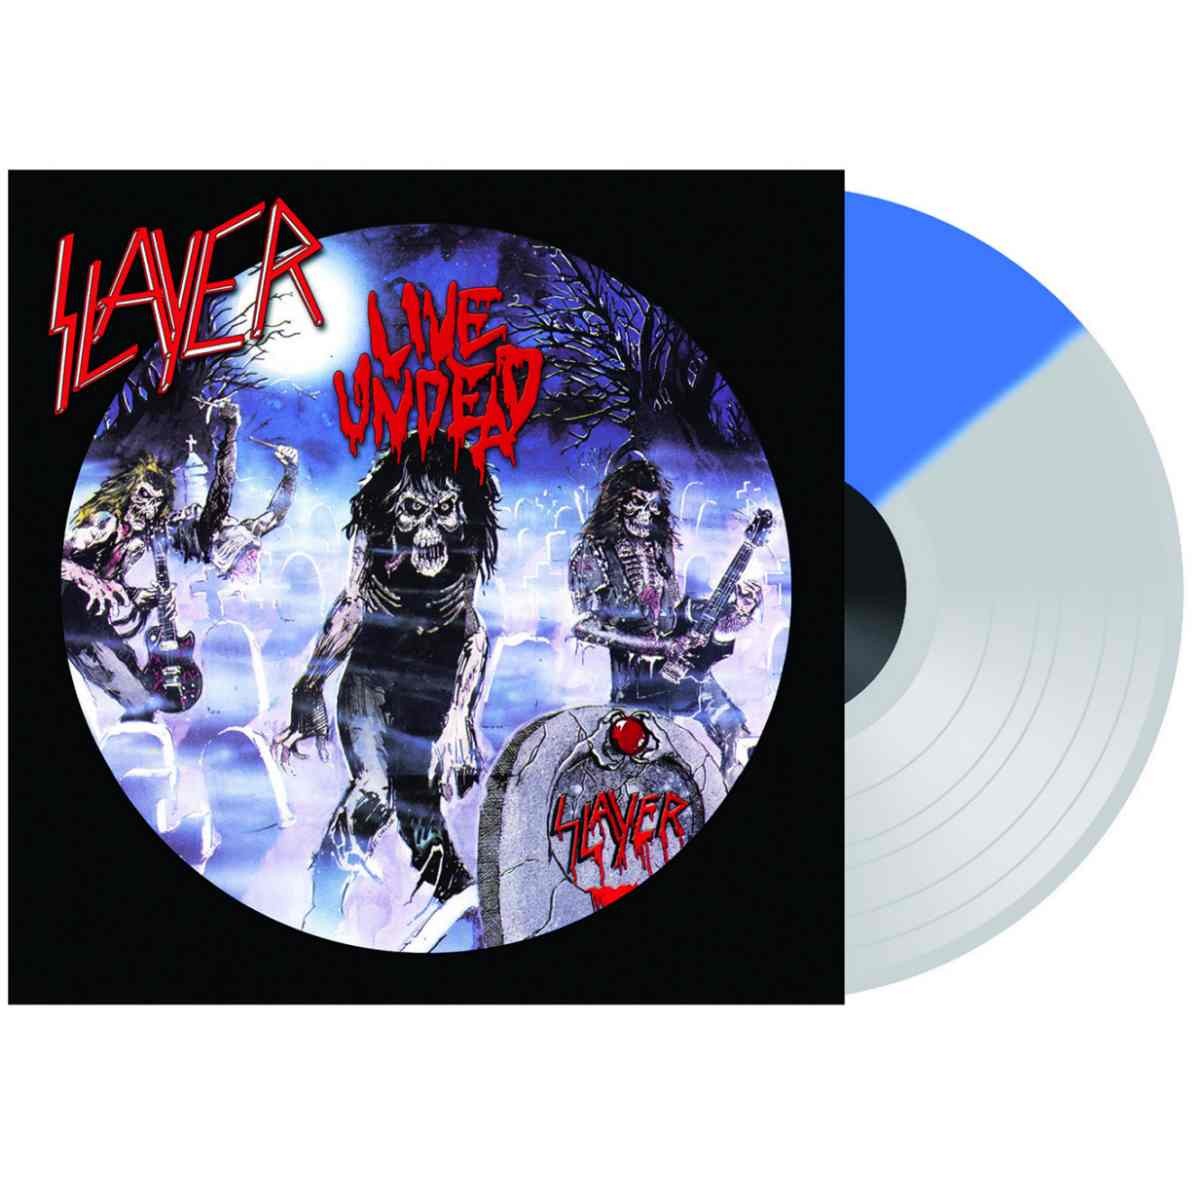 *Slayer(USA) - Live Undead / Haunting the Chapel LP SEAM SPLIT